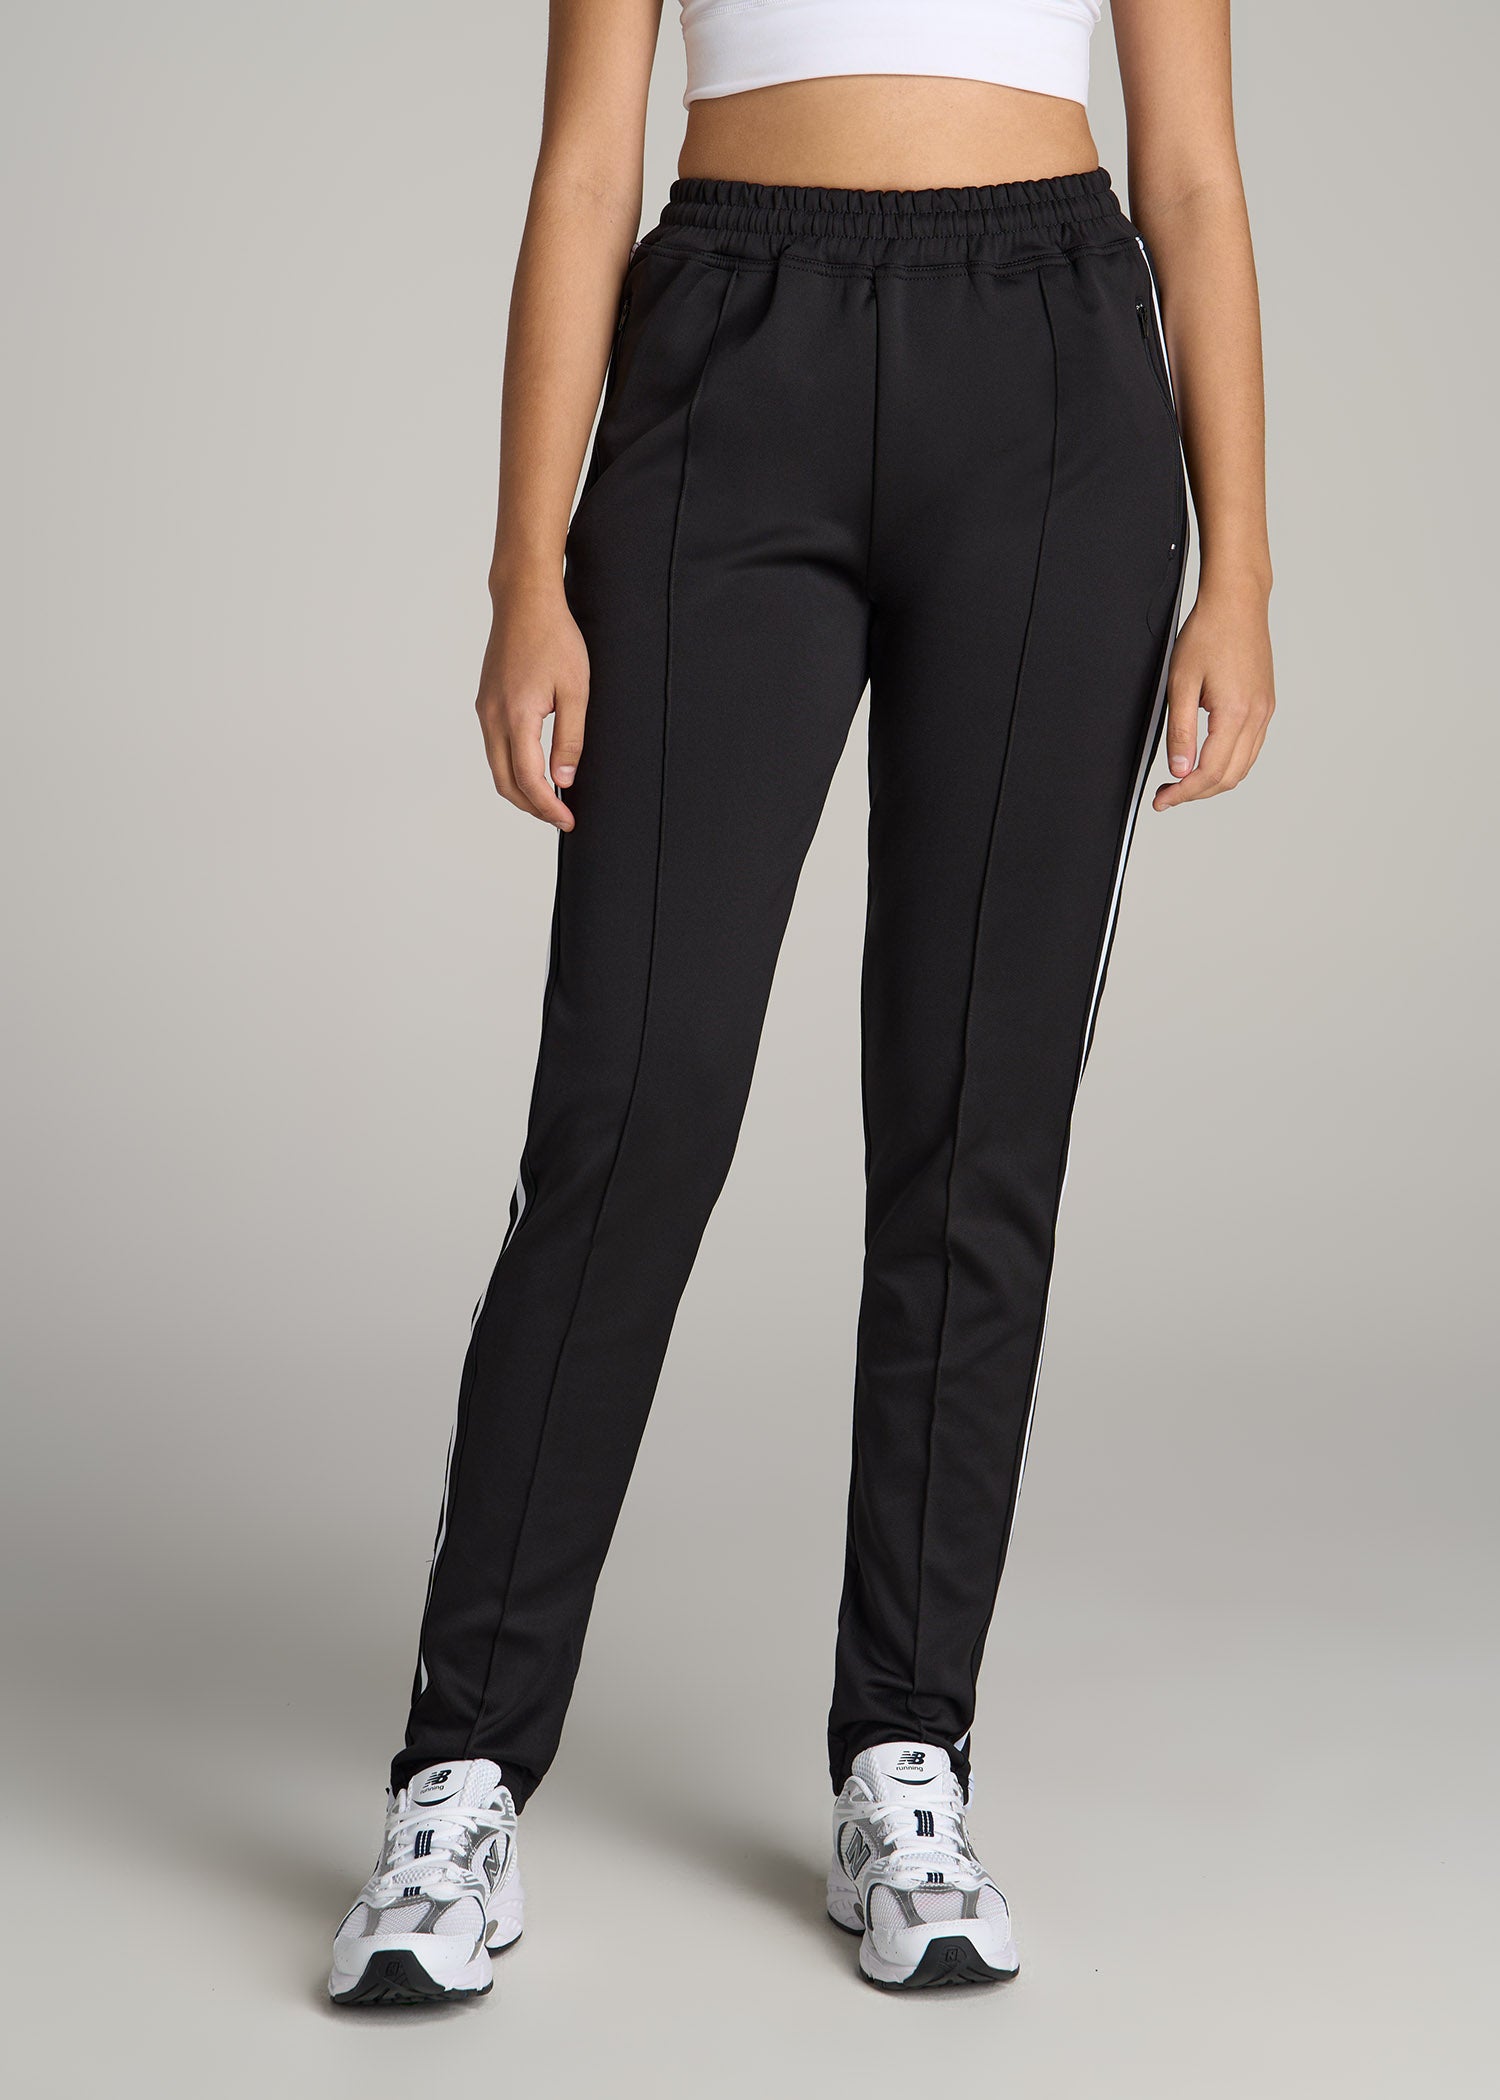 Women's Tall Track Pants: Tall Athletic Black White Stripe Pant